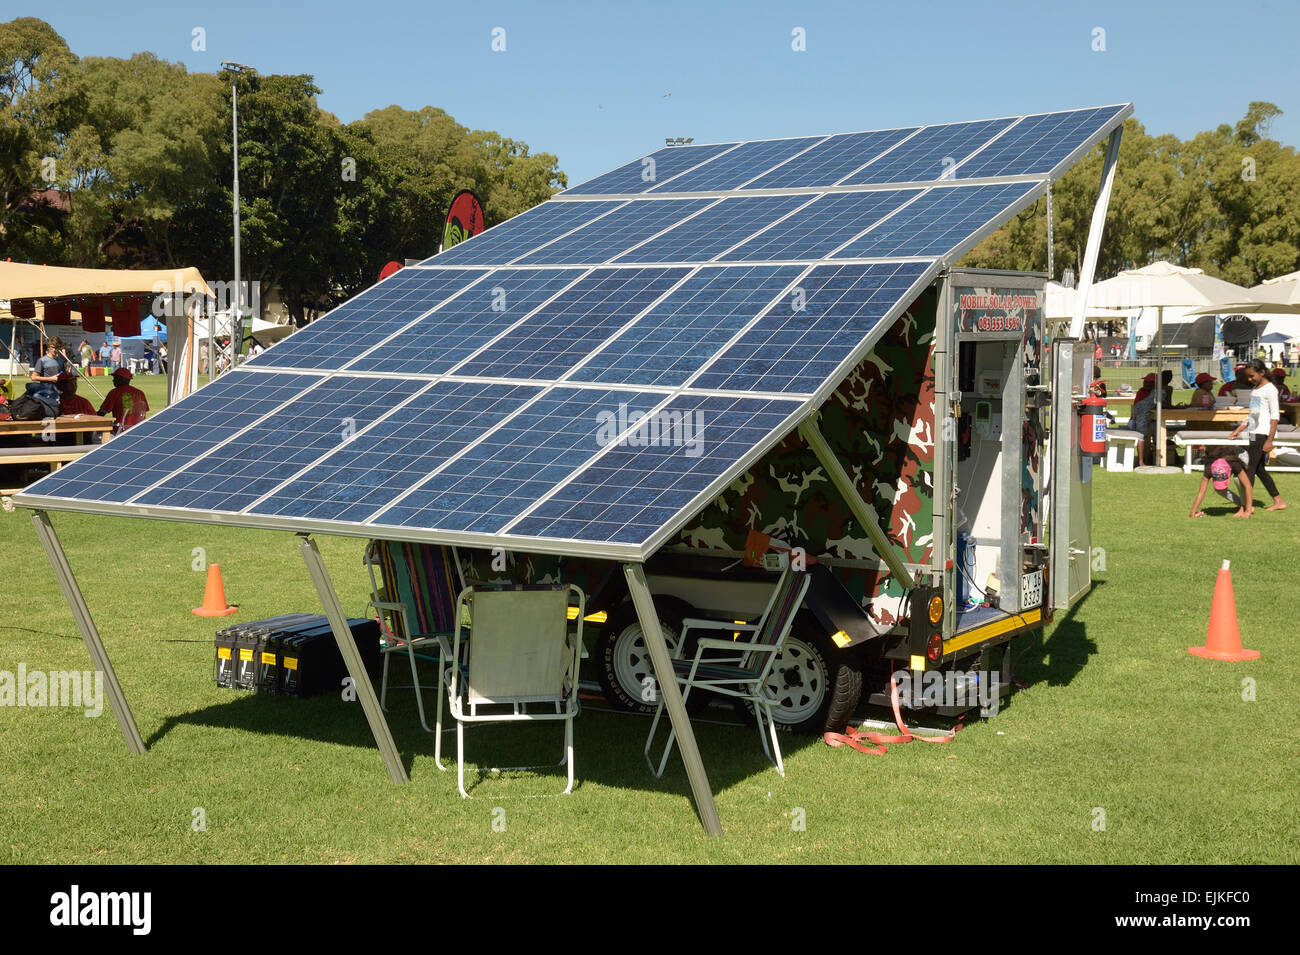 Solar Panel display Stock Photo